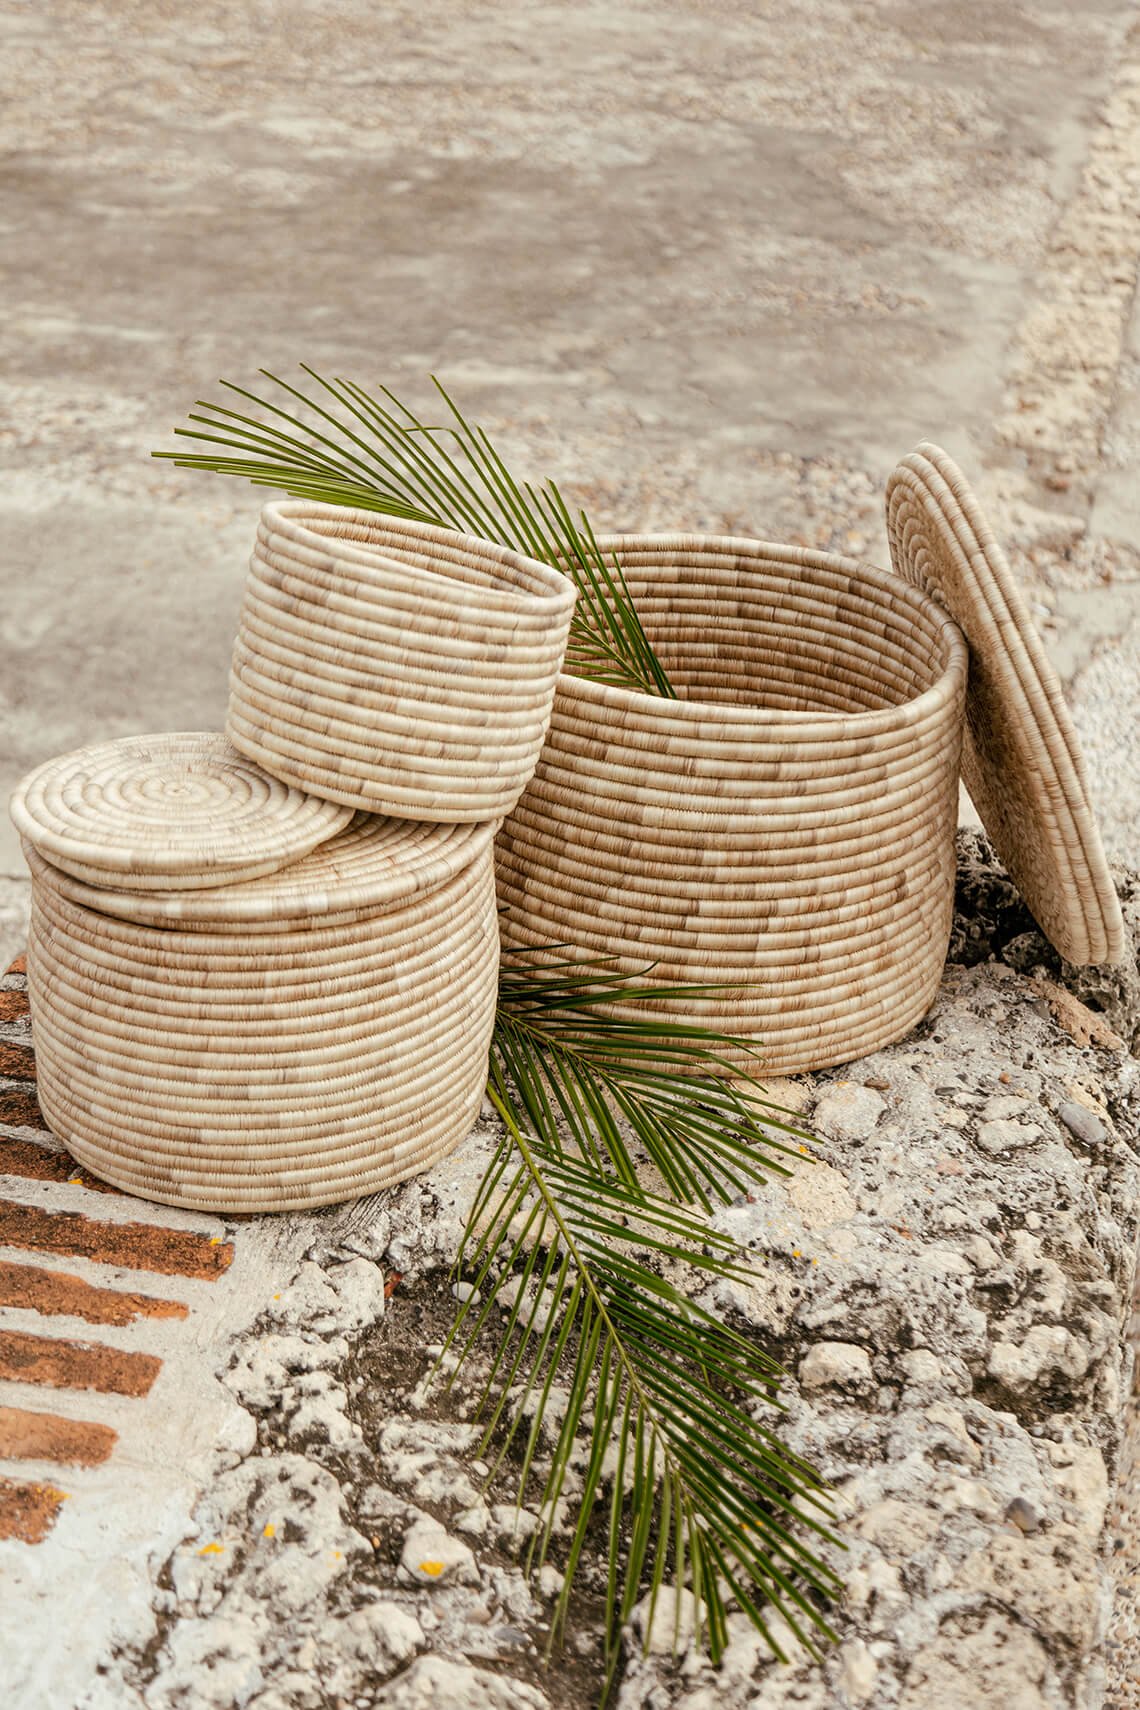 Morenas Storage Baskets (3 sizes) by Zuahaza